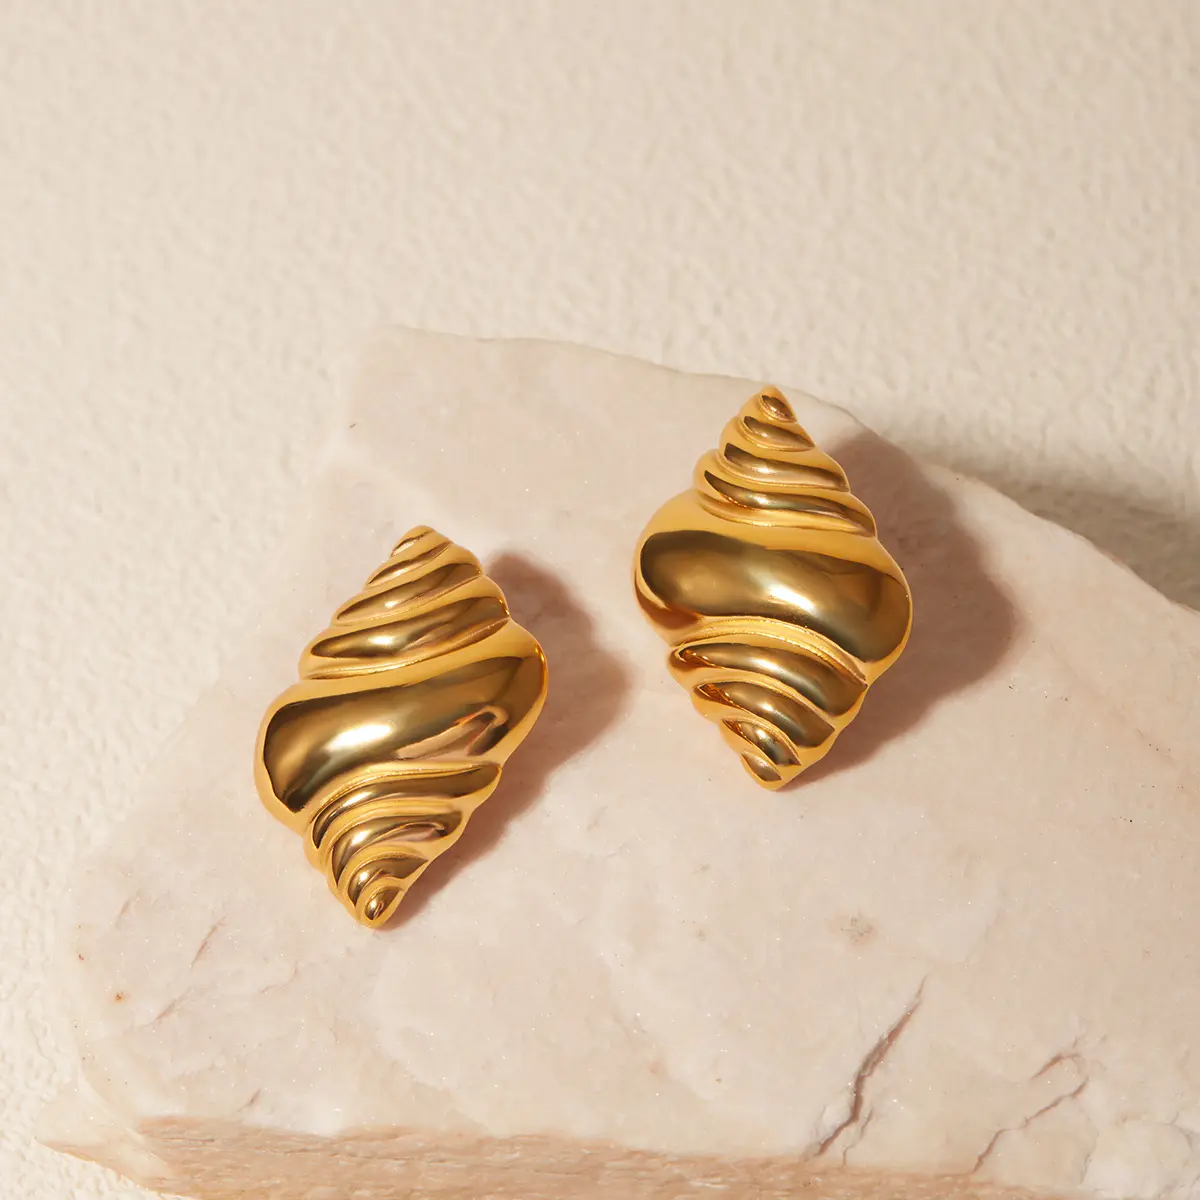 New Design Beach Jewelry Stainless Steel Conch Earrings Tarnish Free Jewelry 18K Gold Plated Sea Snail Earrings for Women